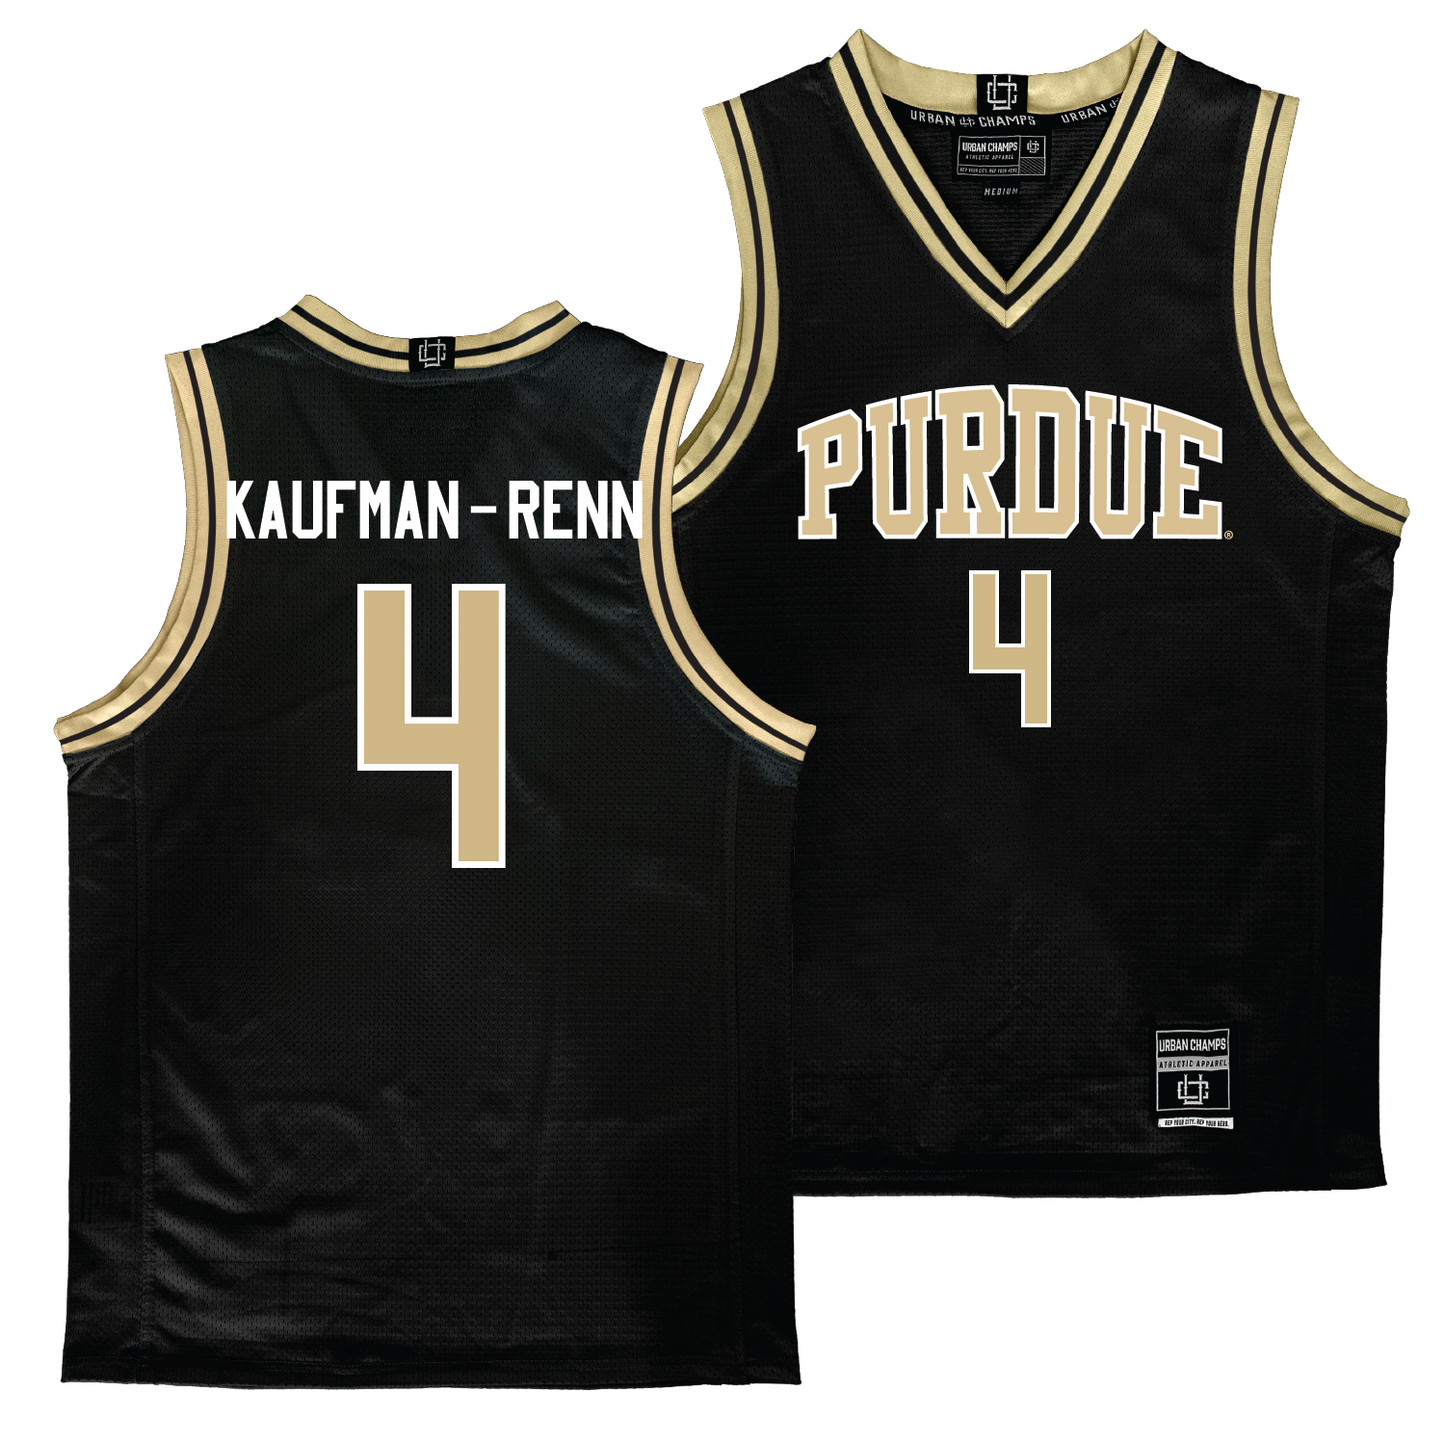 Purdue Men's Black Basketball Jersey - Trey Kaufman-Renn | #4 Youth Small